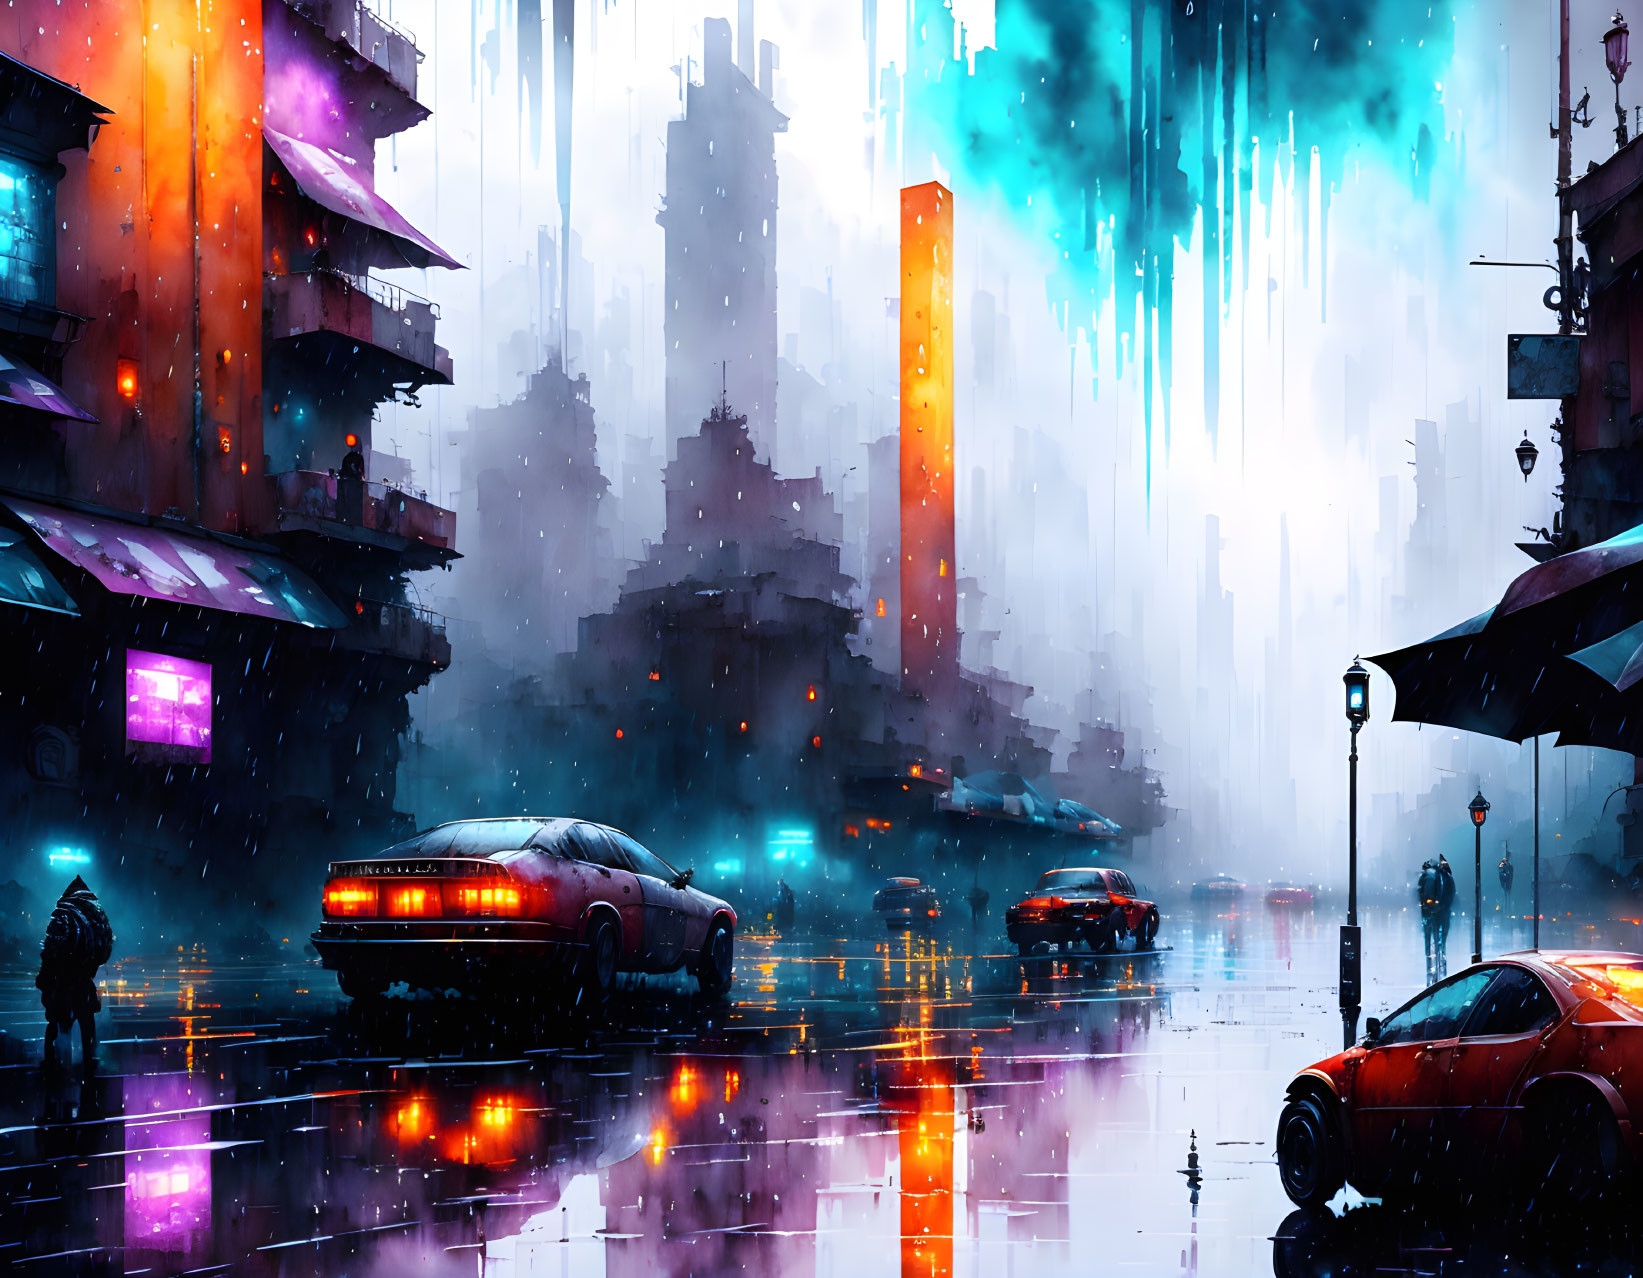 Neon-lit Cyberpunk Cityscape with Rain and Skyscrapers